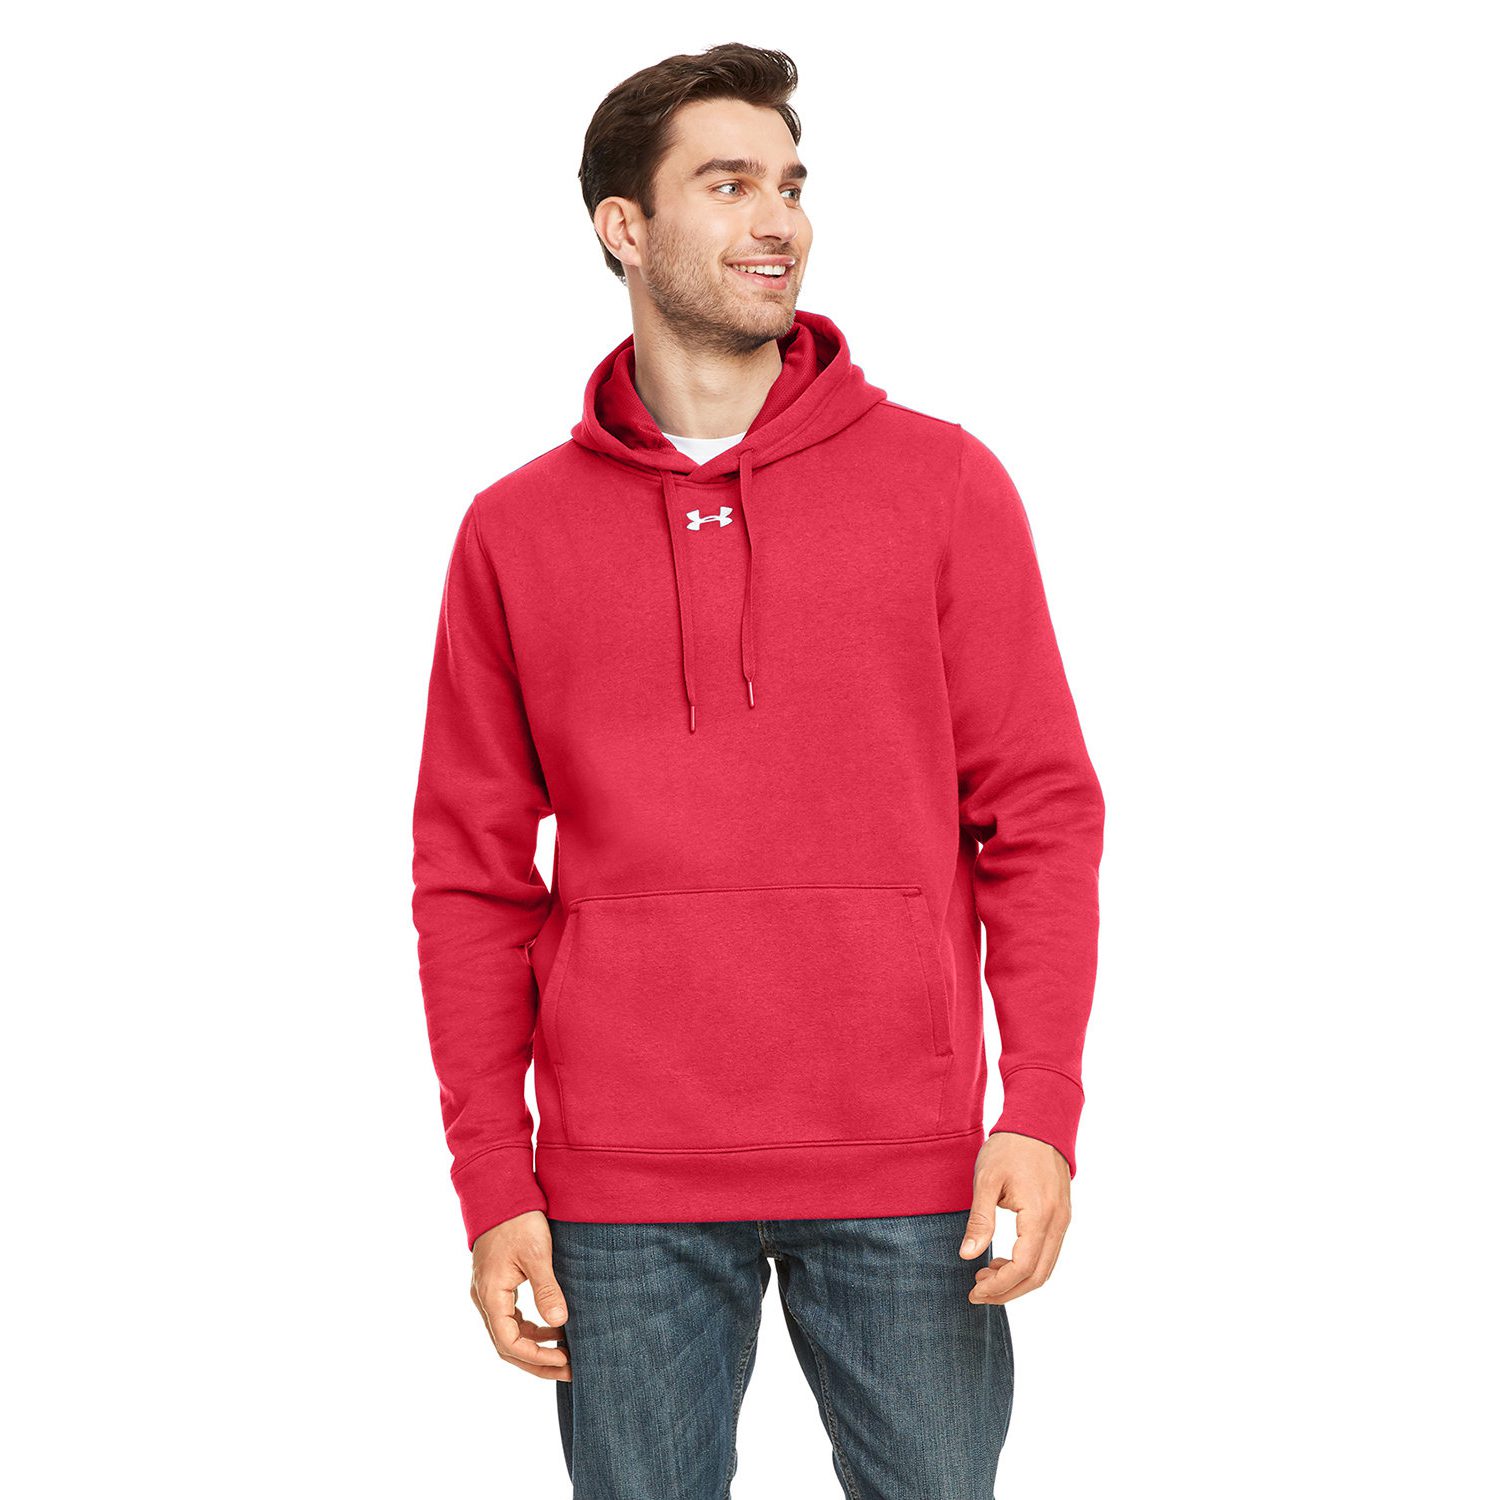 UNDER ARMOUR® Men's Hustle Pullover Hooded Sweatshirt #1300123 Red